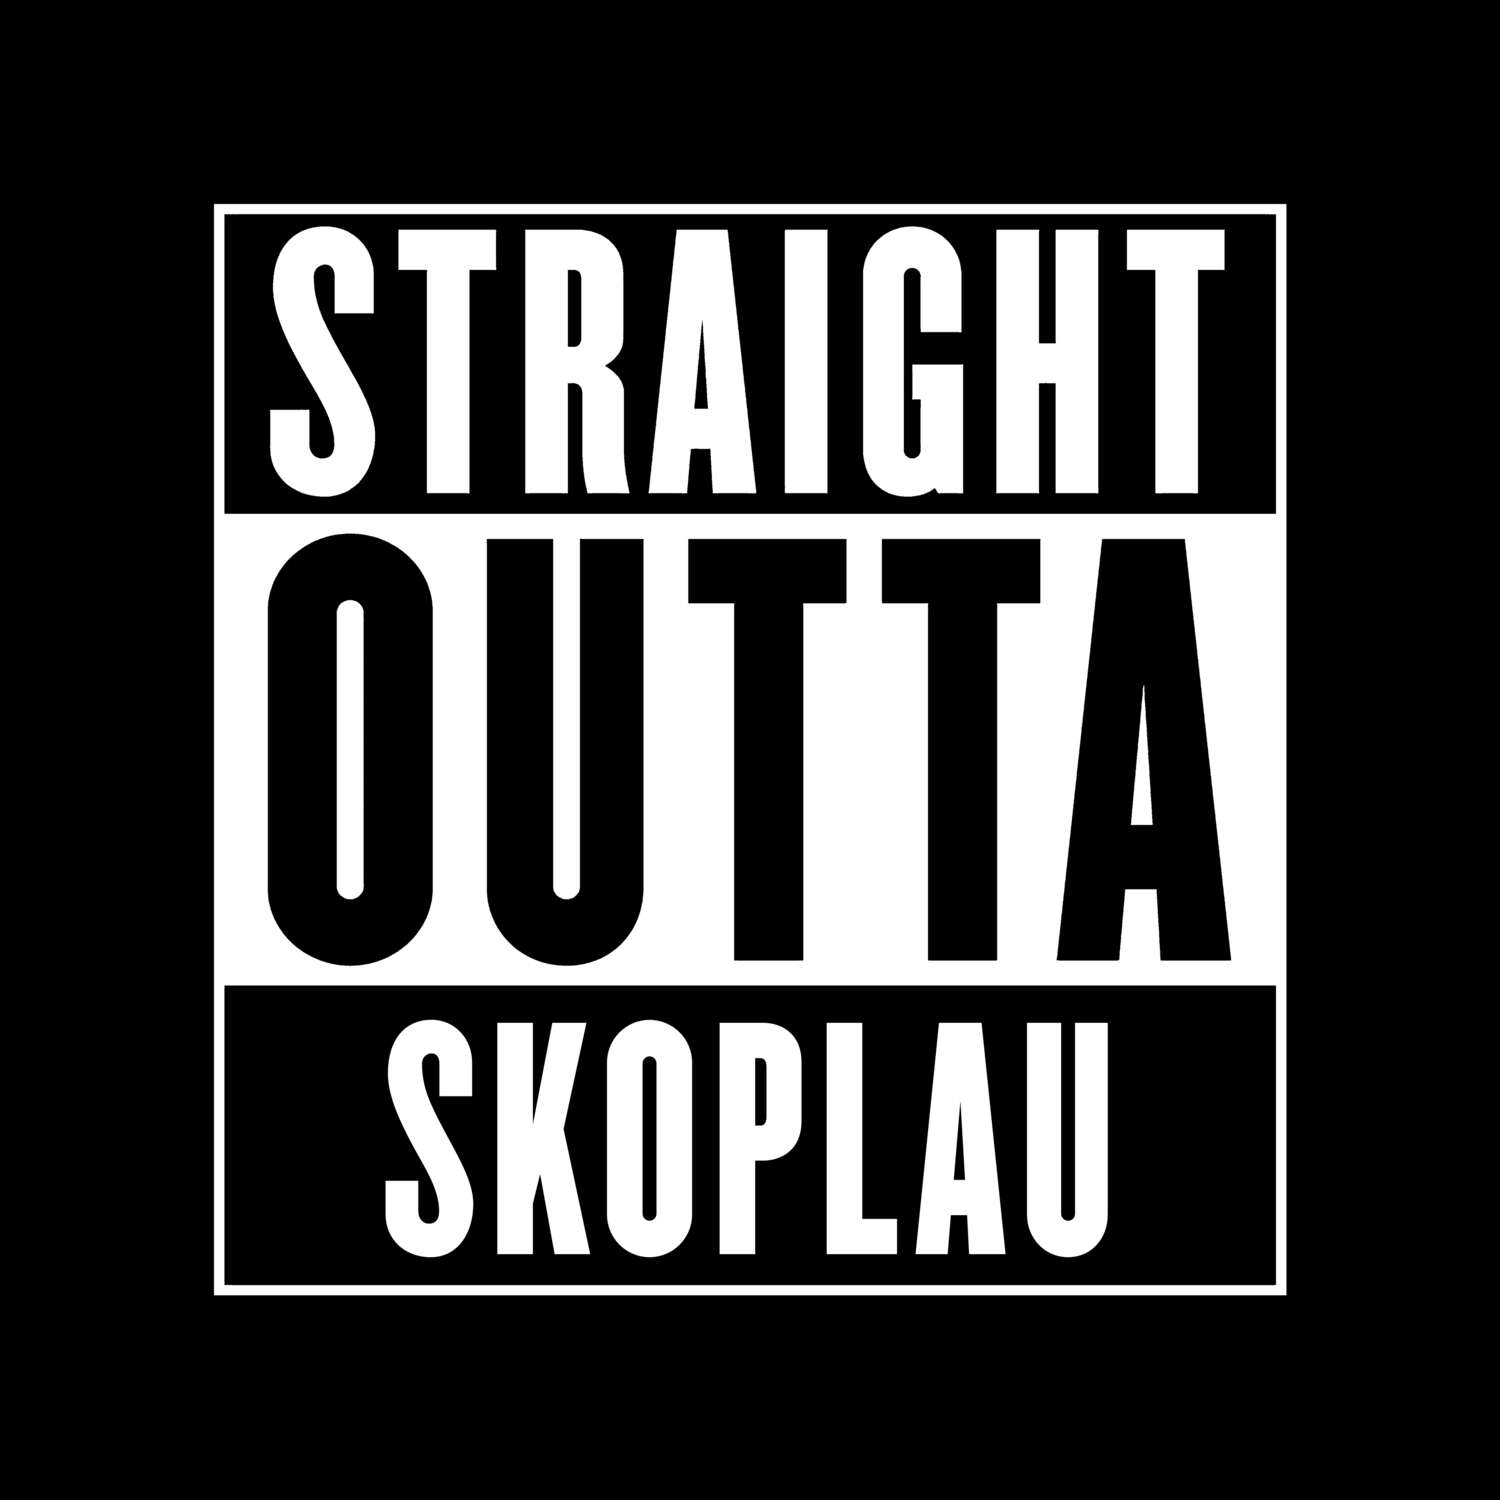 Skoplau T-Shirt »Straight Outta«